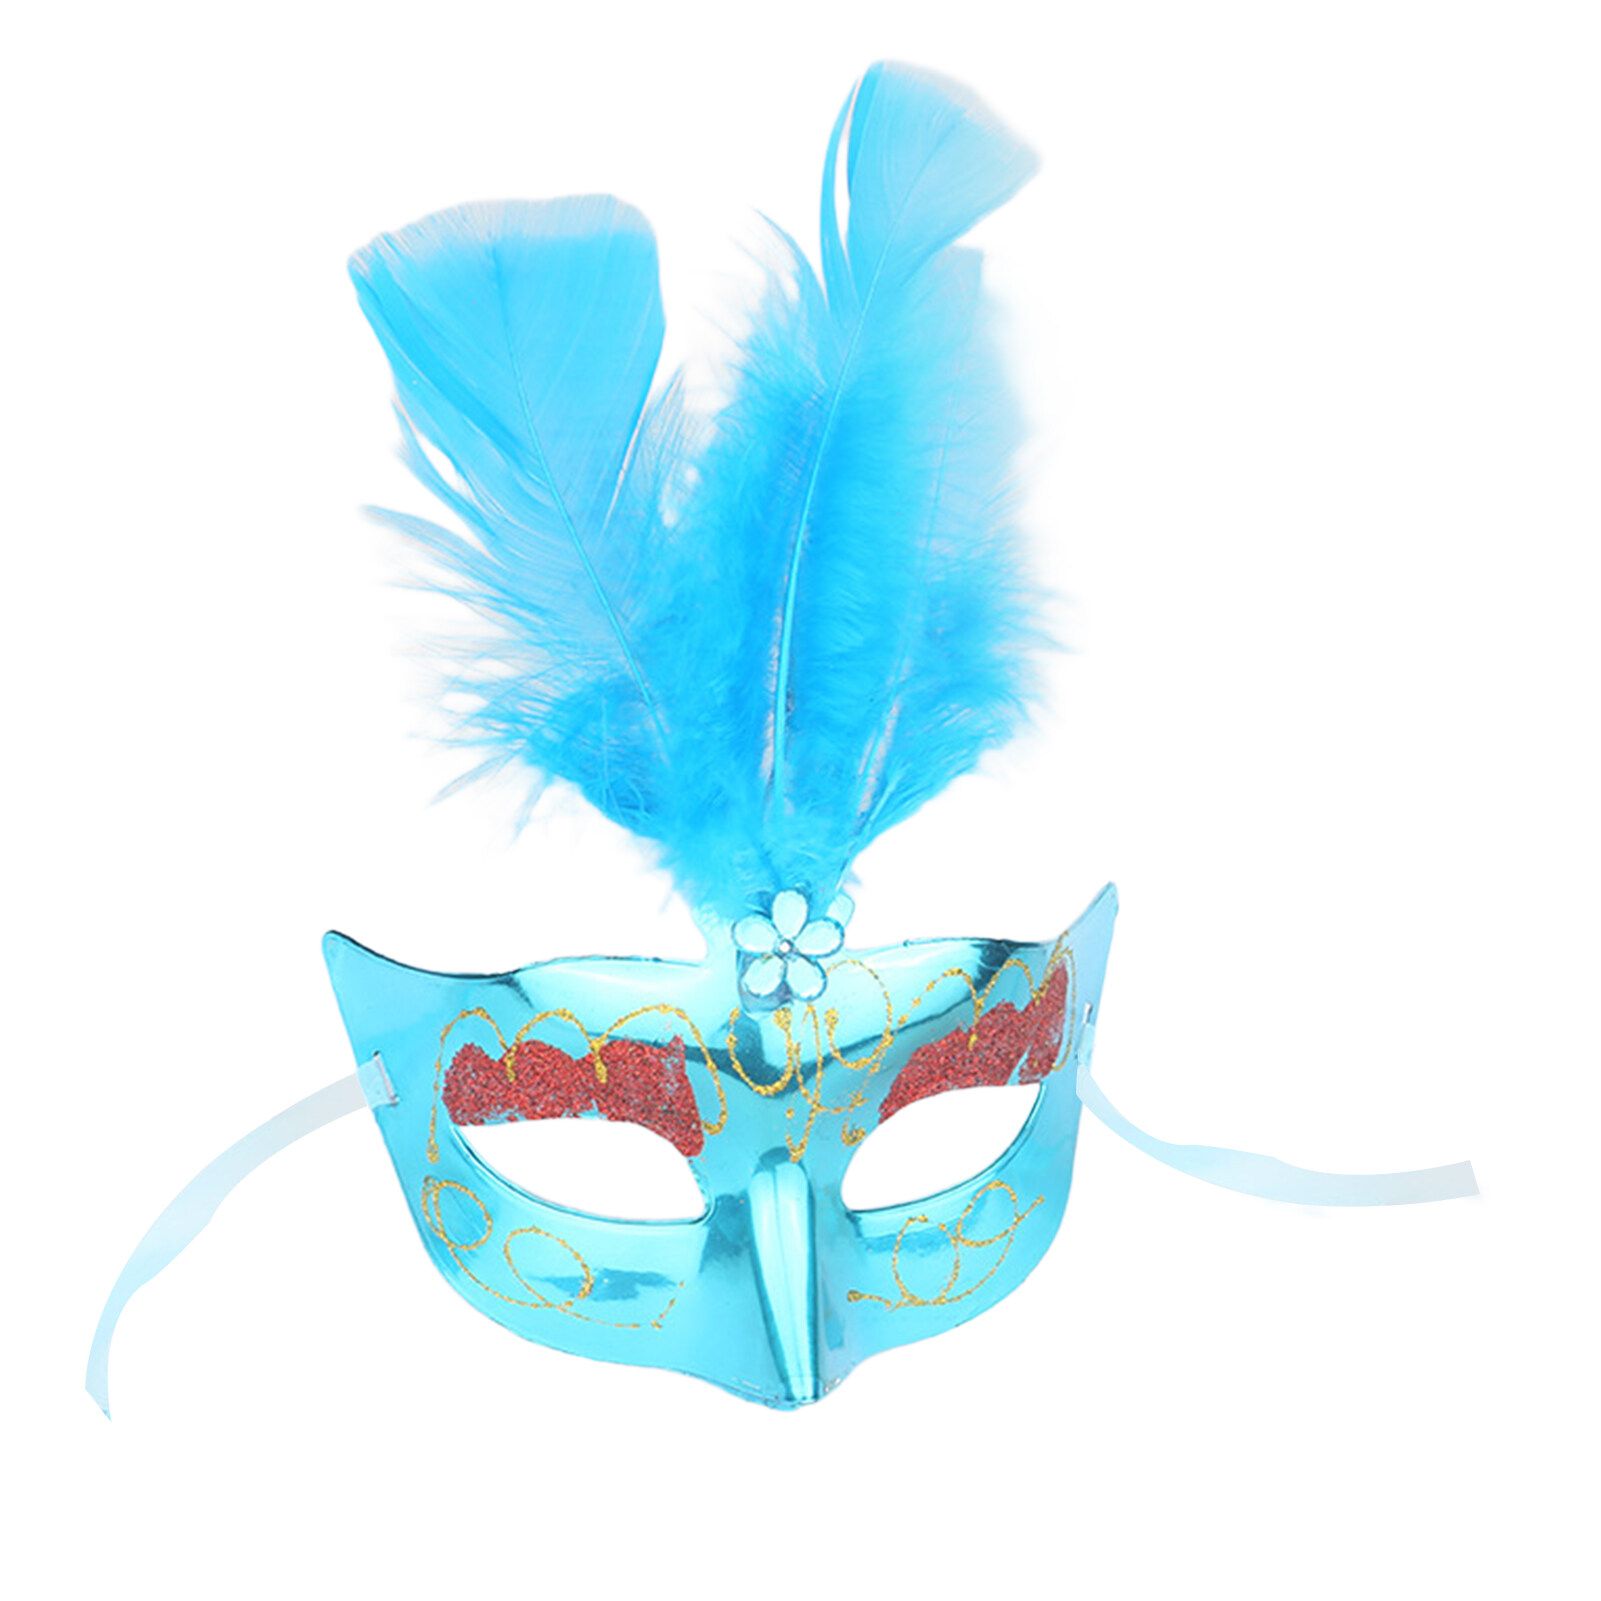 microgood Halloween Masque Adjustable Strap Feather Masque Cosplay Face